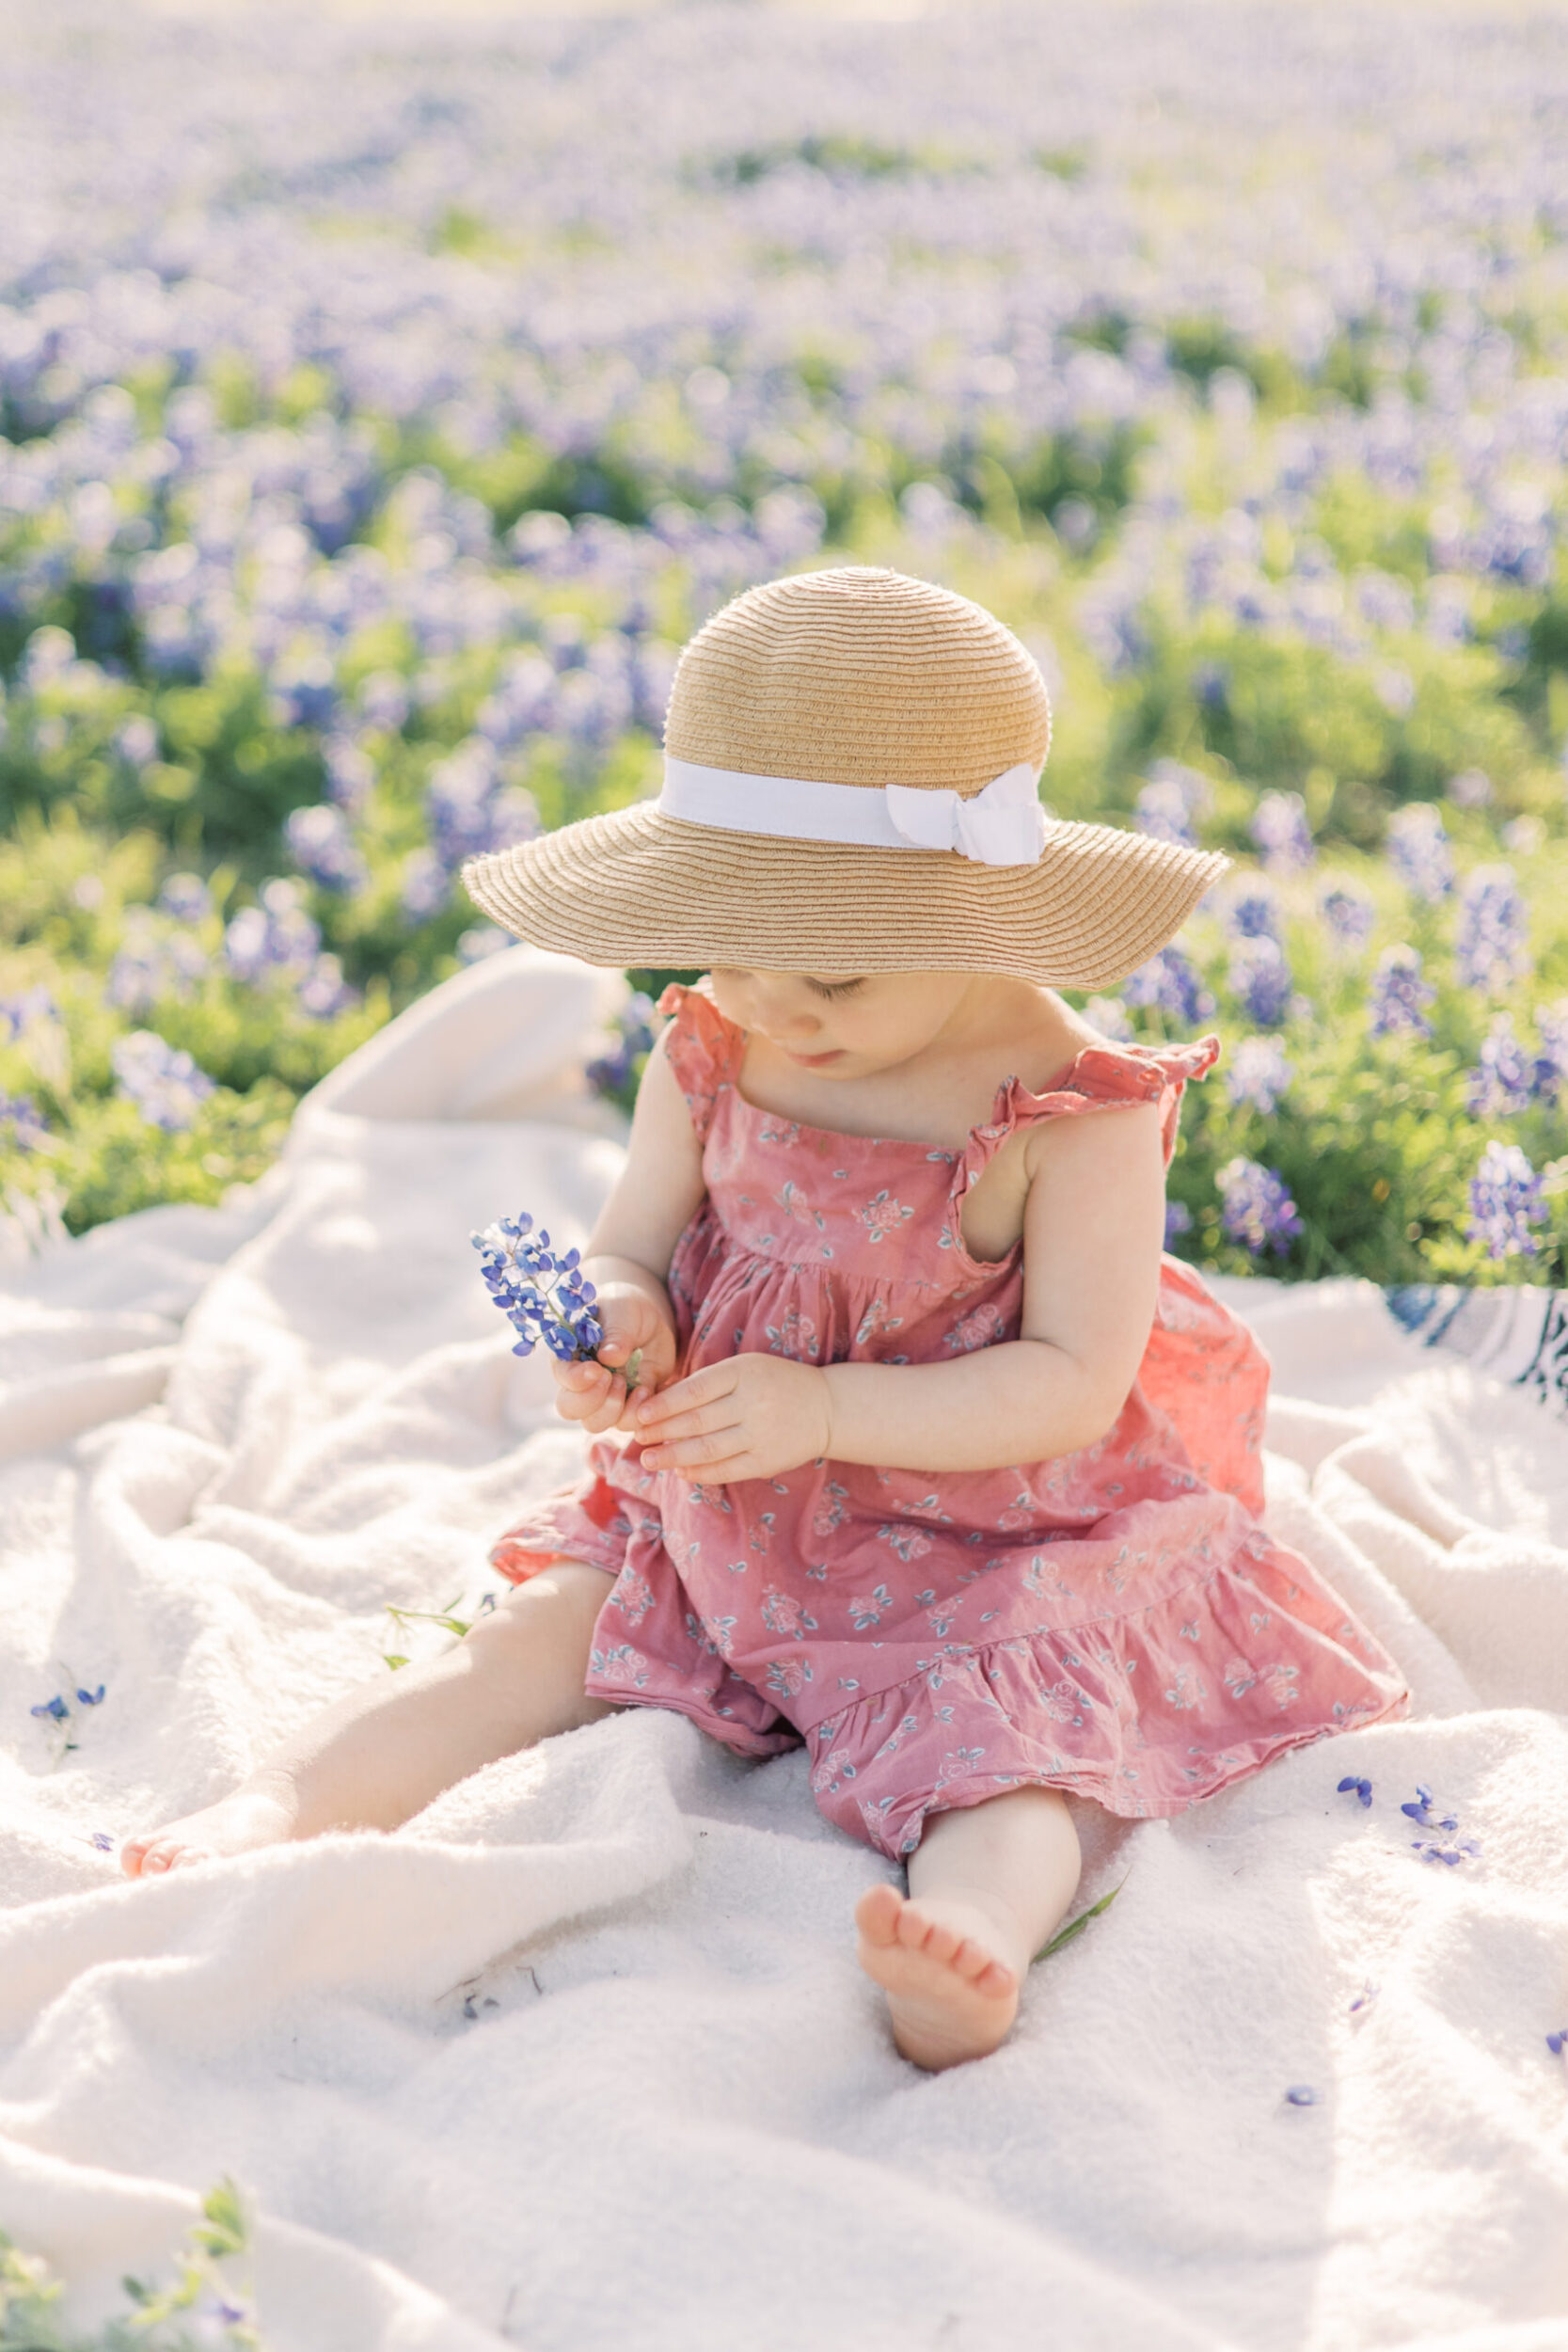 Toddler sits on blanket in bluebonnet field picking a bluebonnet apart.